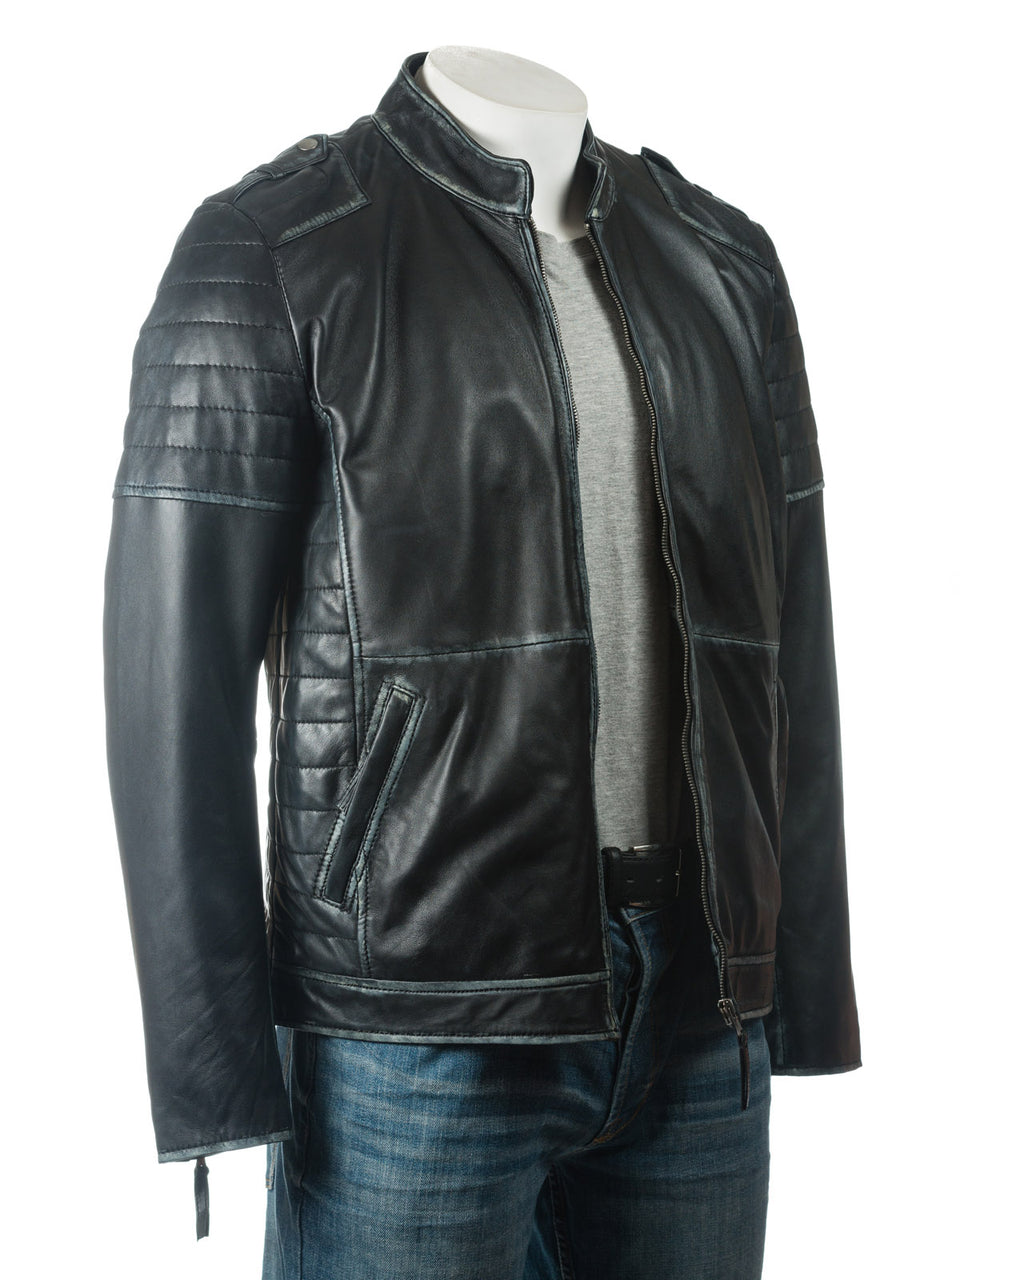 Men's Black Distressed Collarless Biker Style Leather Jacket: Uriel